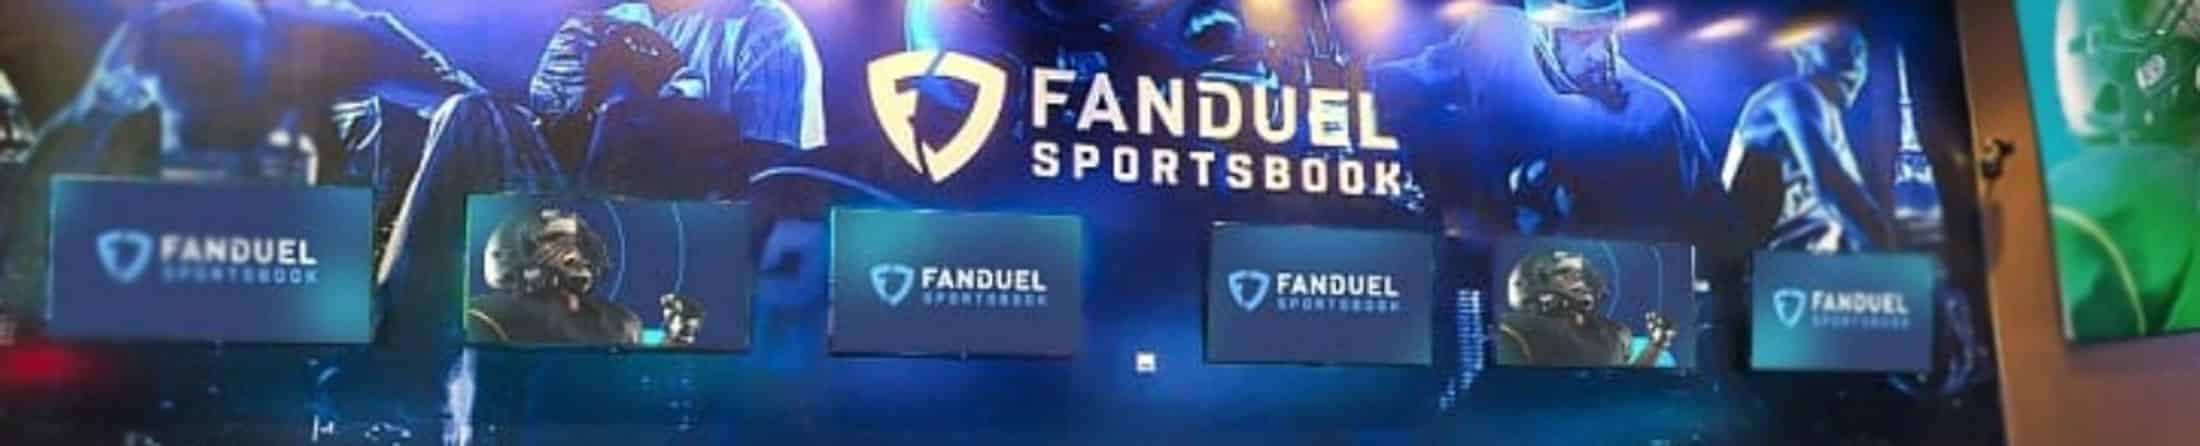 FanDuel Sportsbook -header